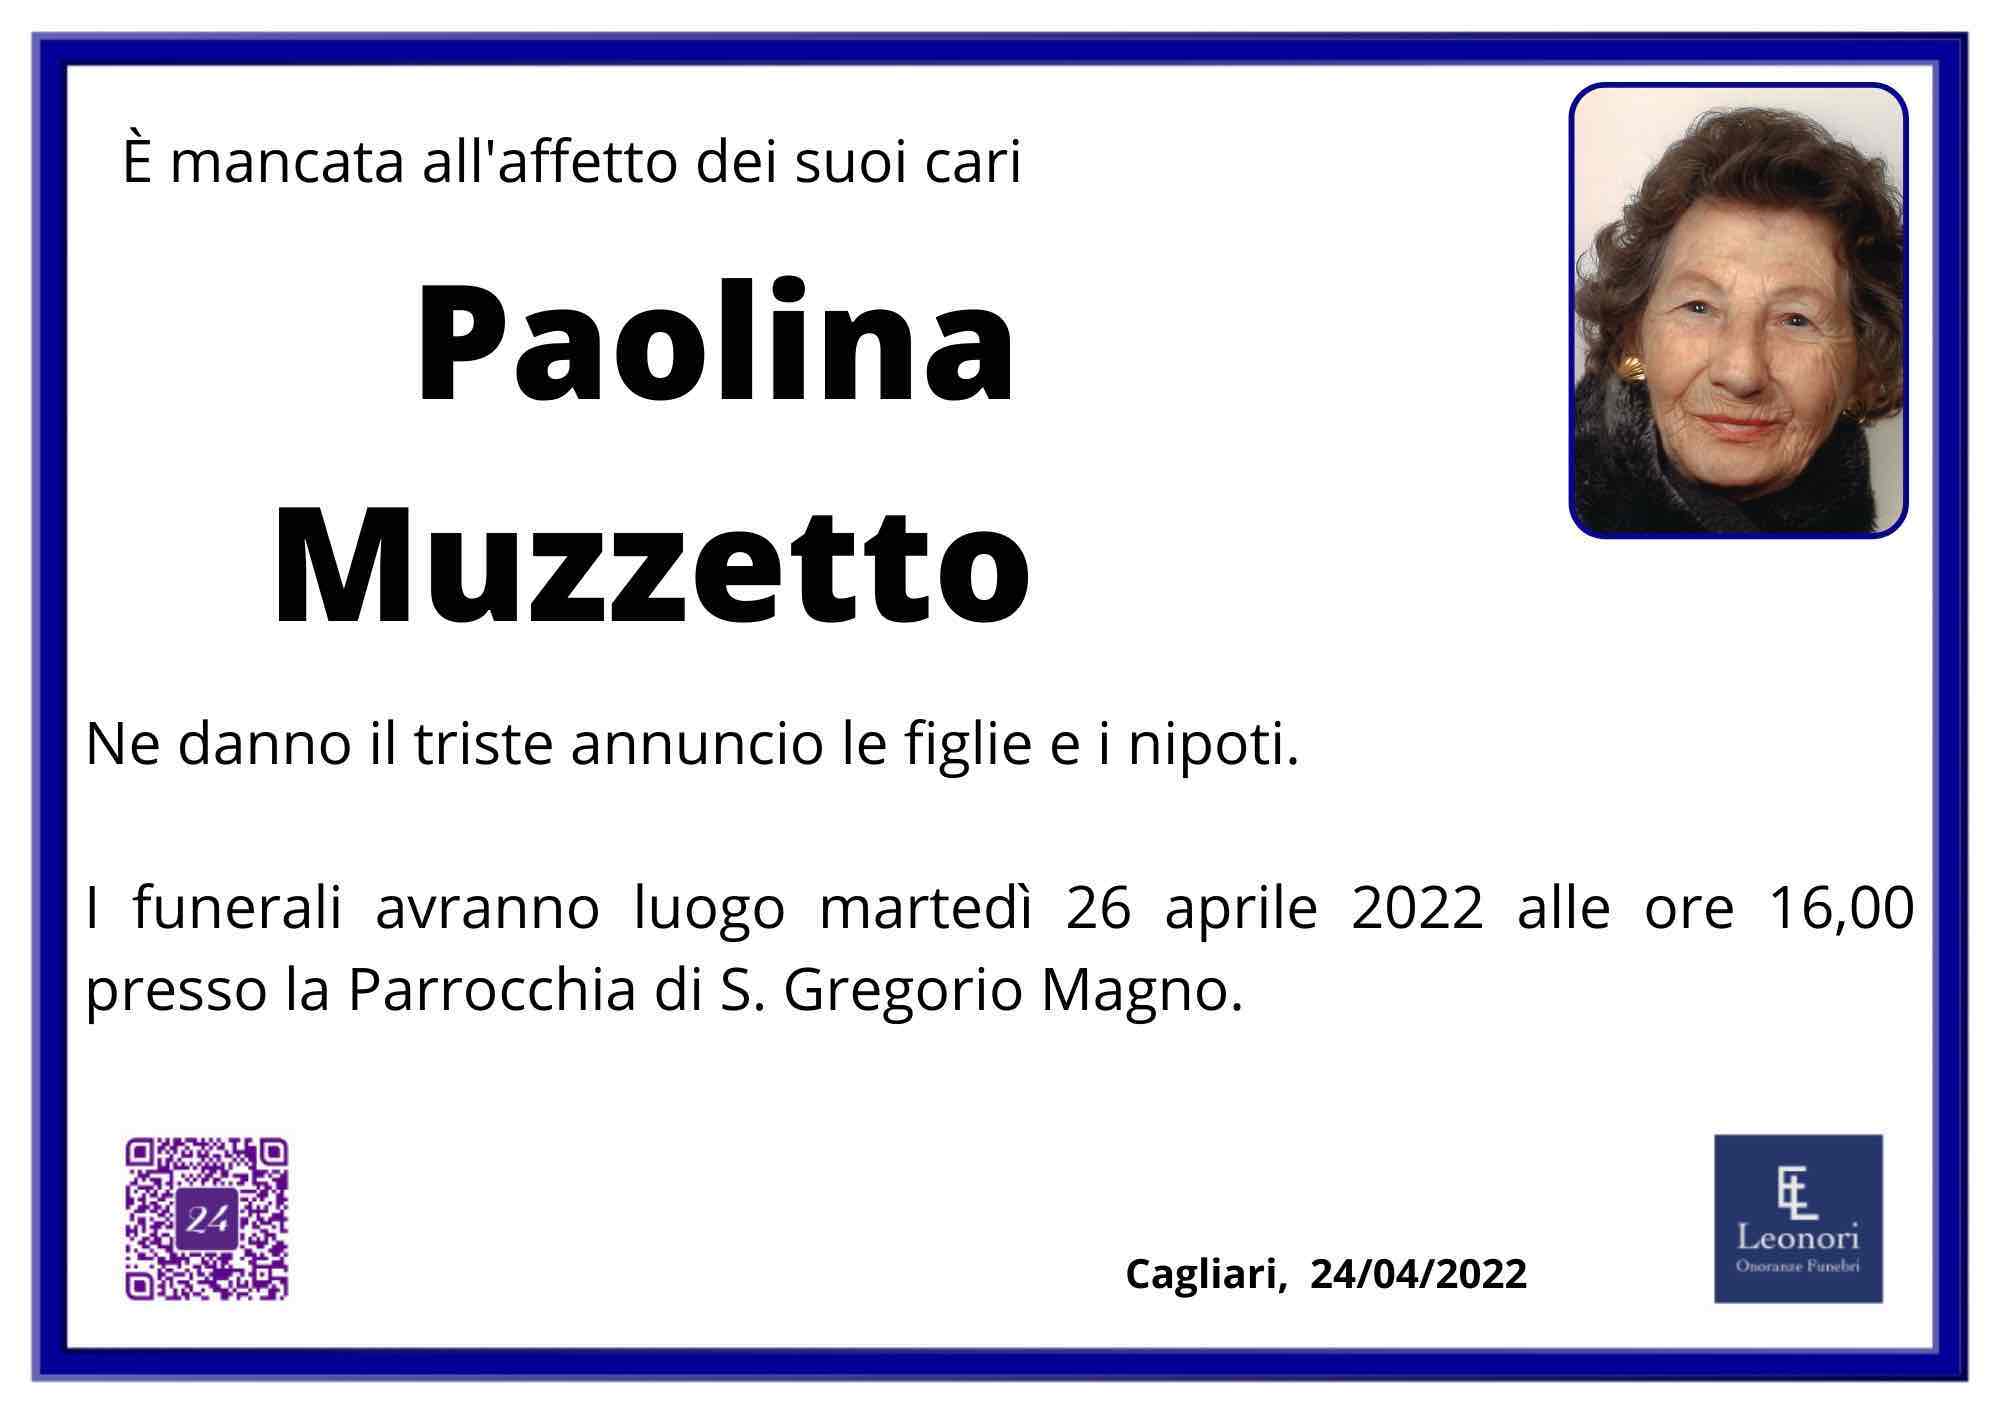 Paolina Muzzetto